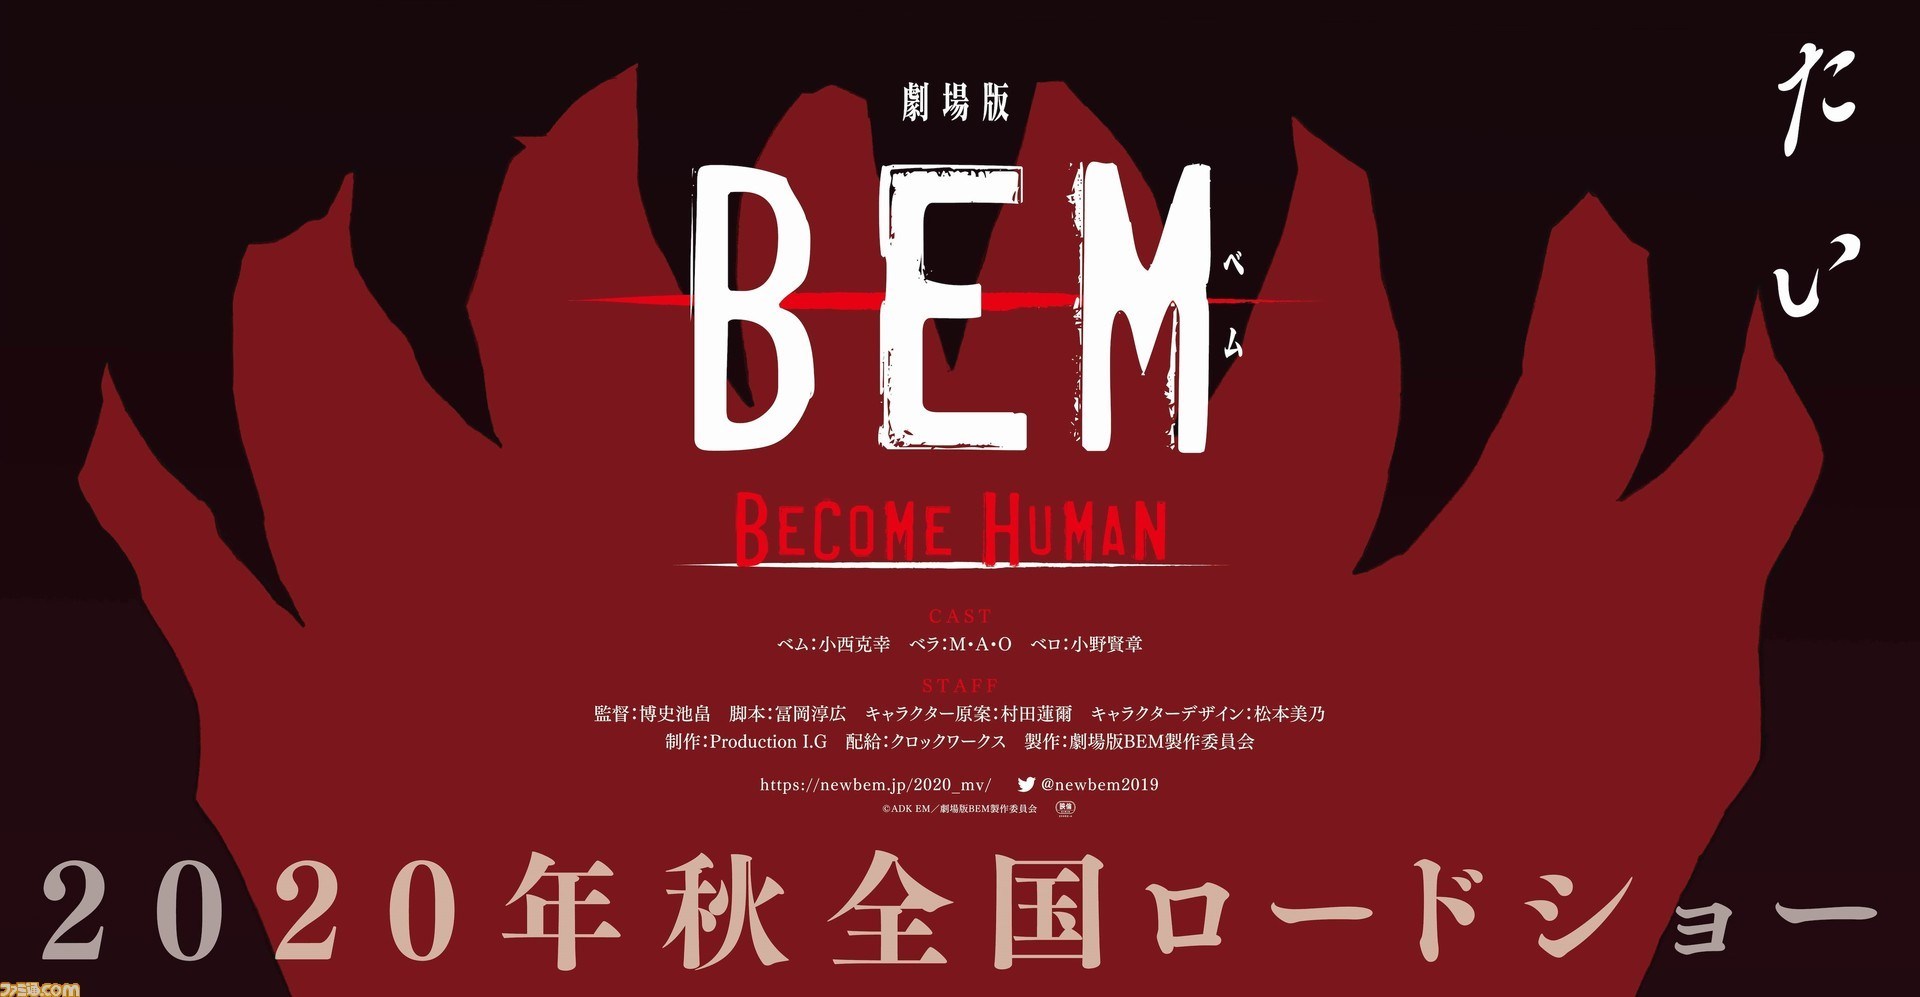 bem movie become human ps4